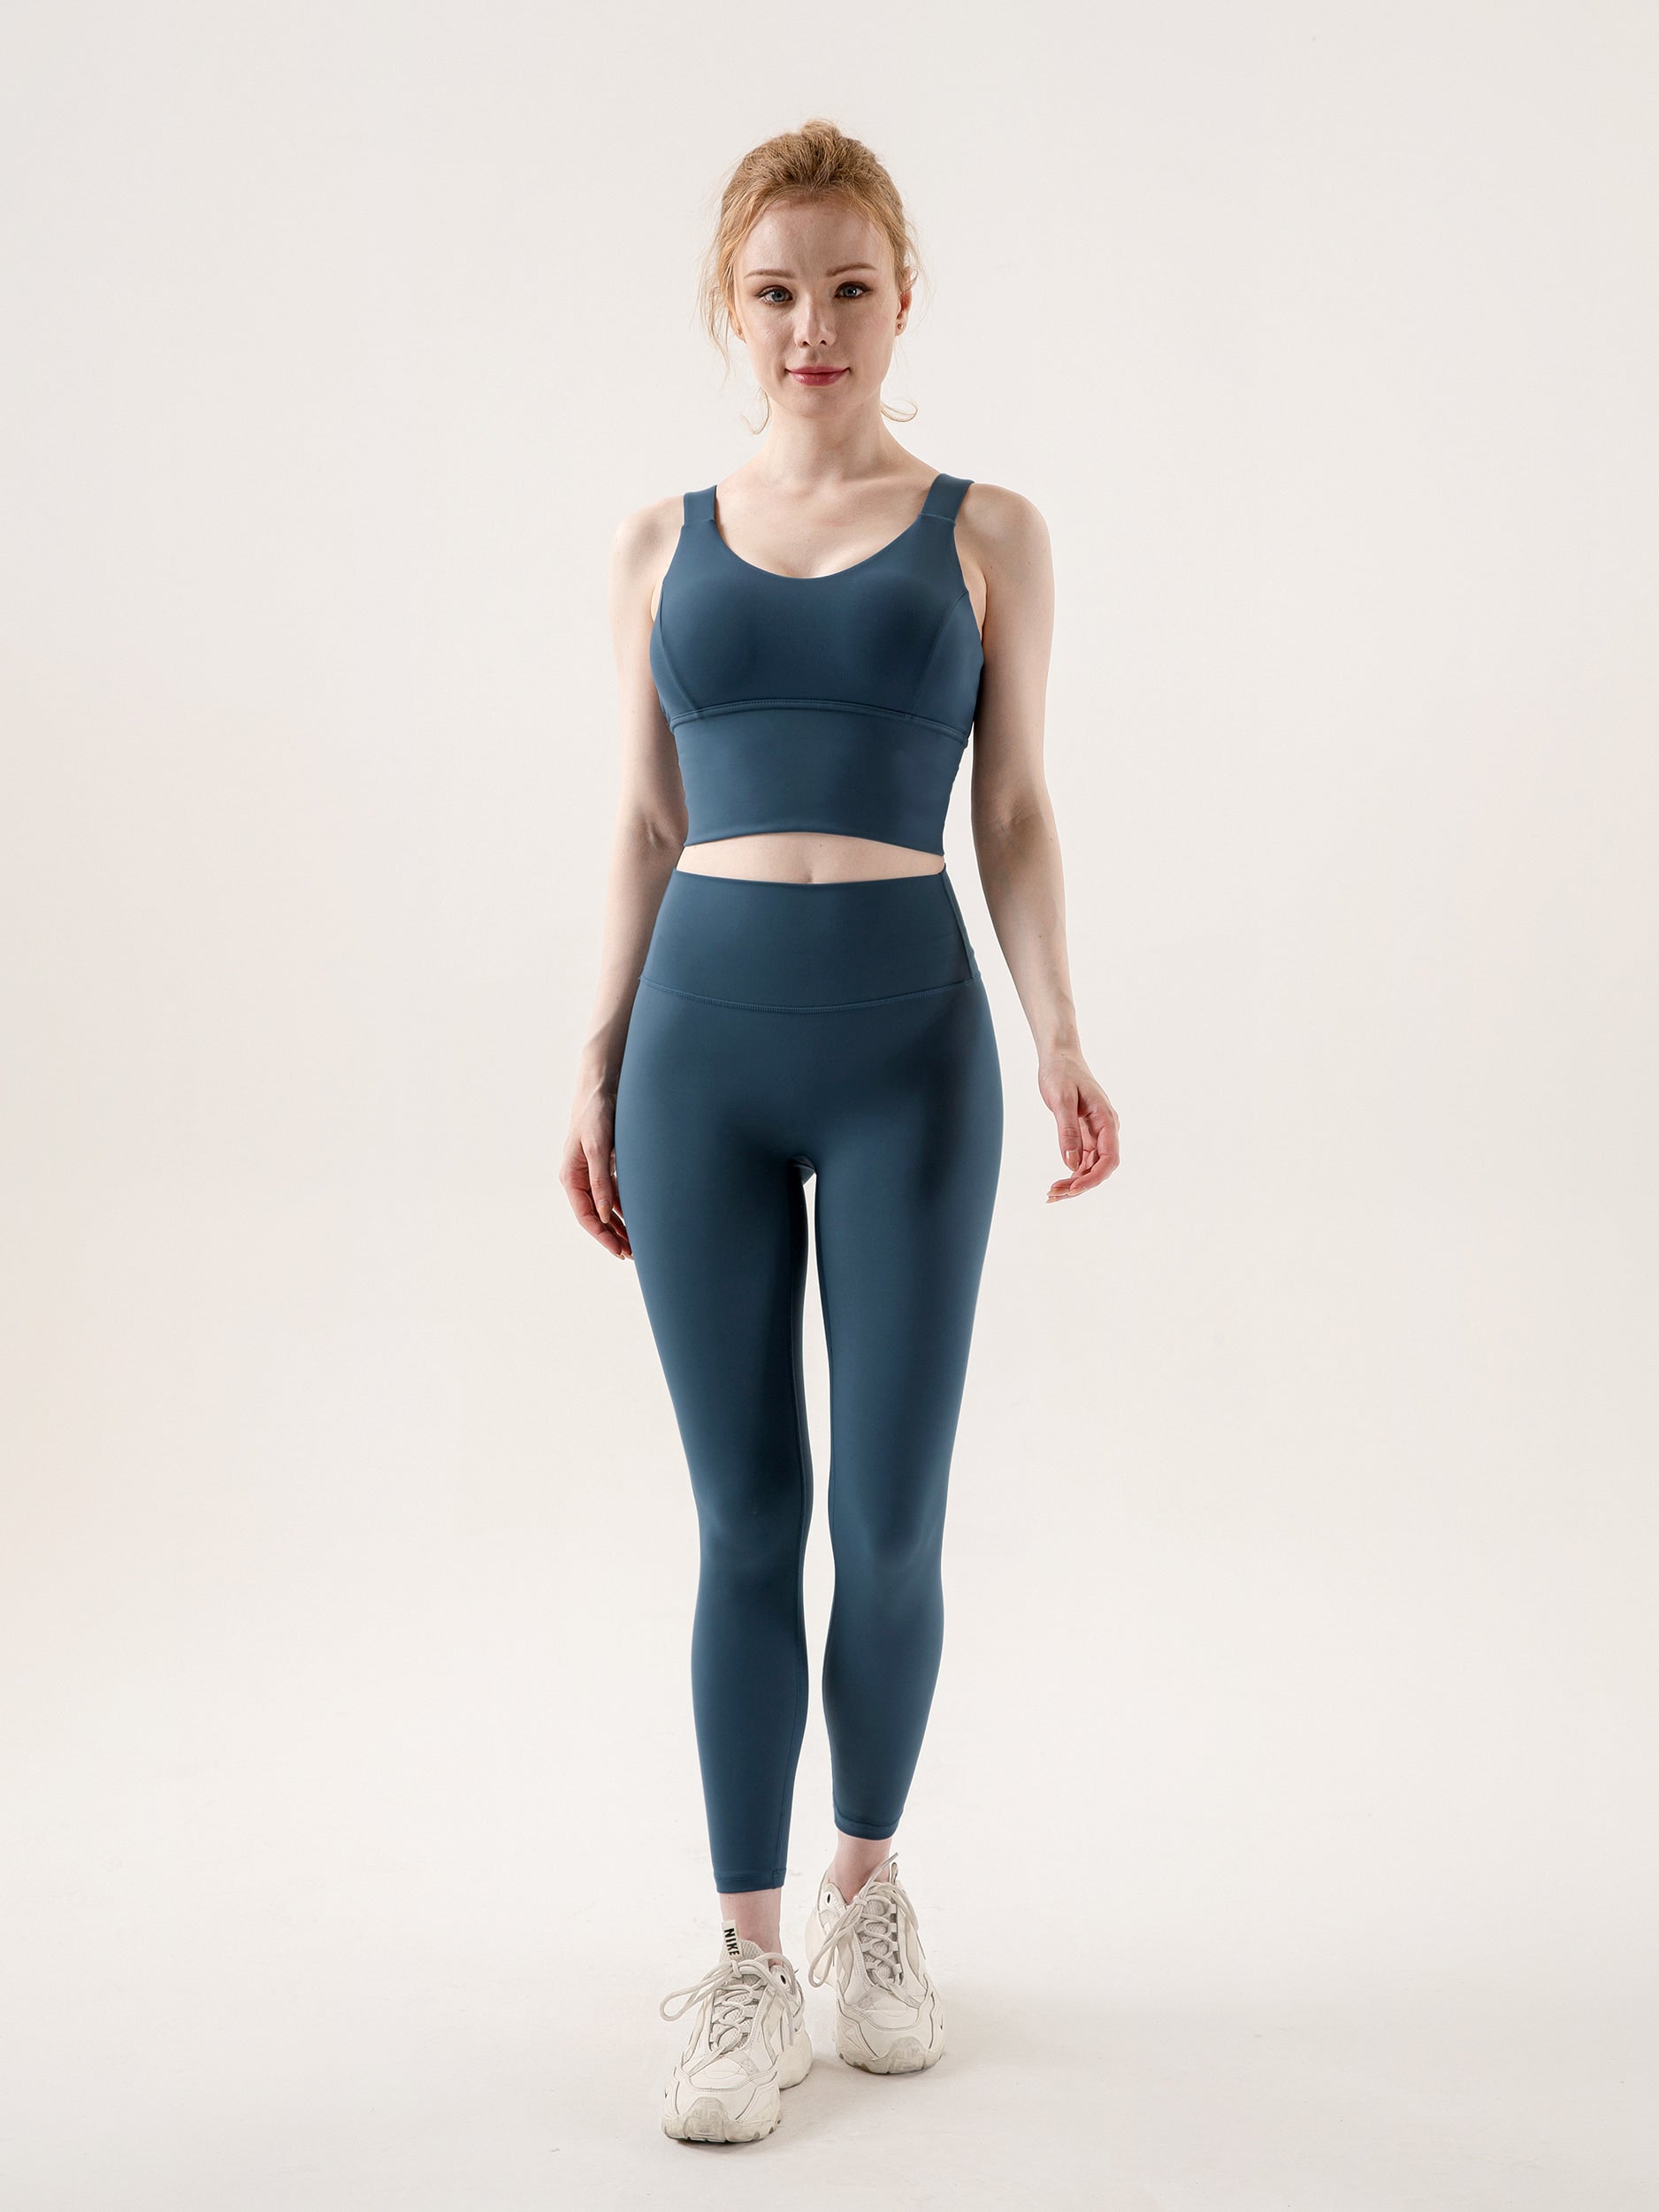 Vital 'n' Free Leggings - Slate Blue: Breathe Easy, Move Freely – Click  Holic Activewear